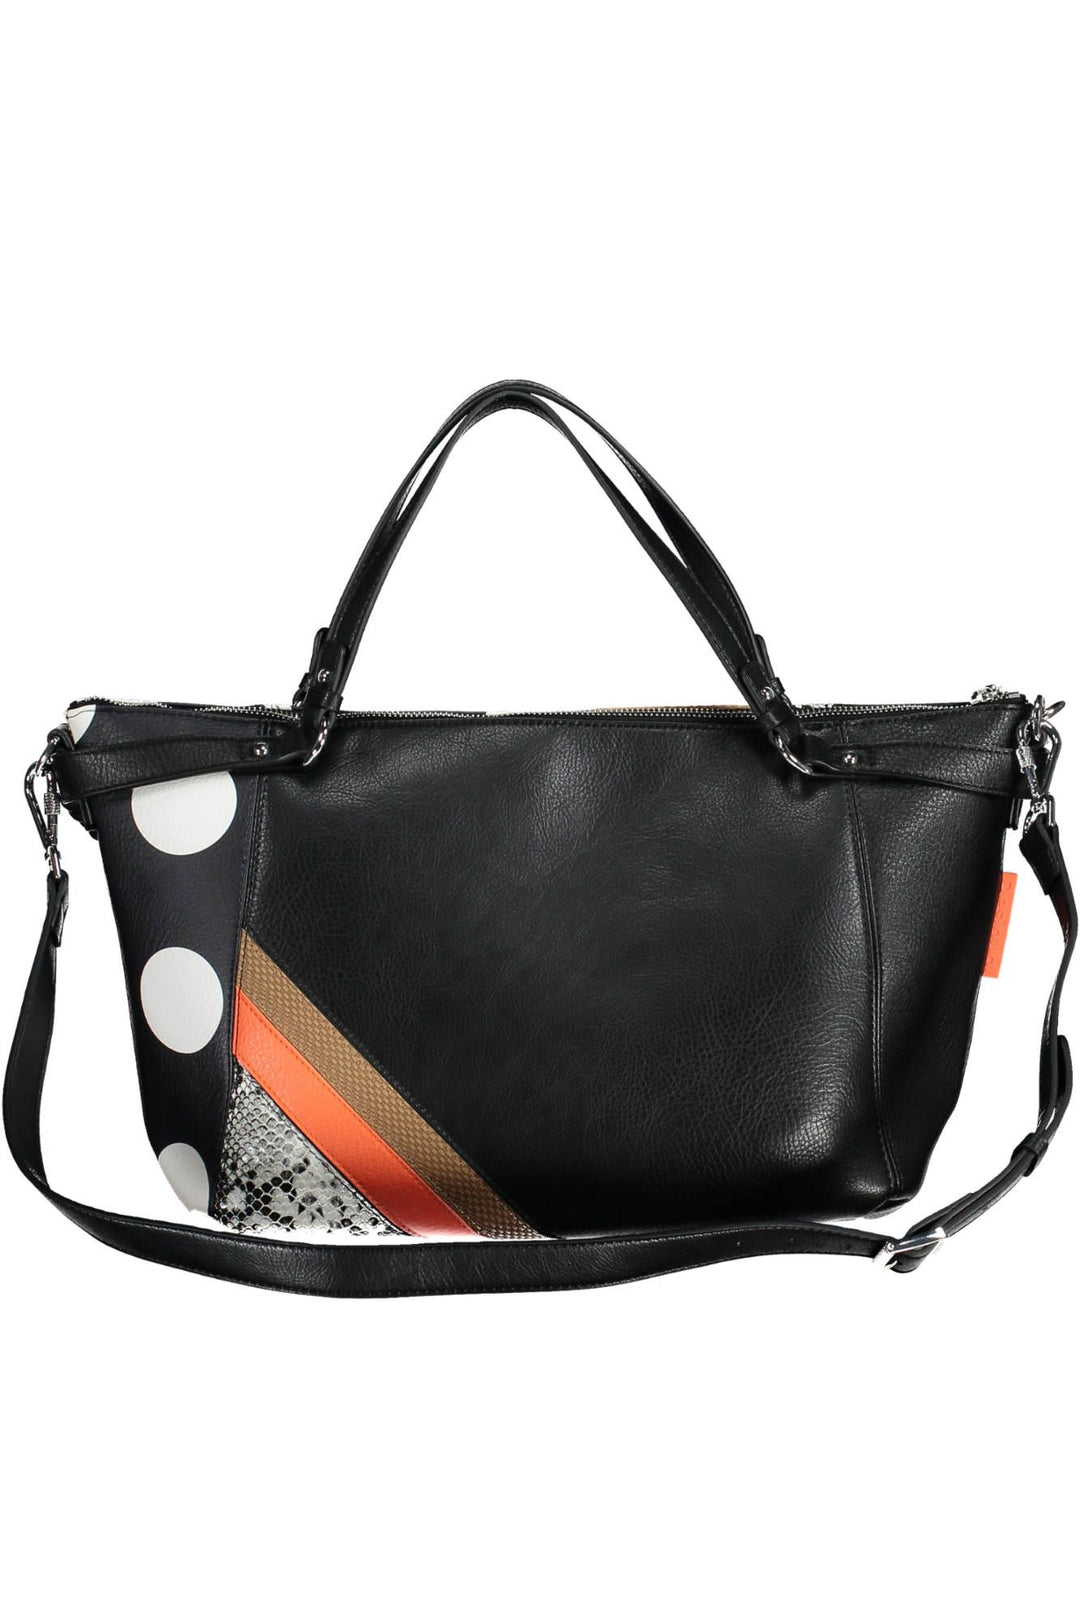 Desigual Elegant Black Versatile Handbag with Removable Straps